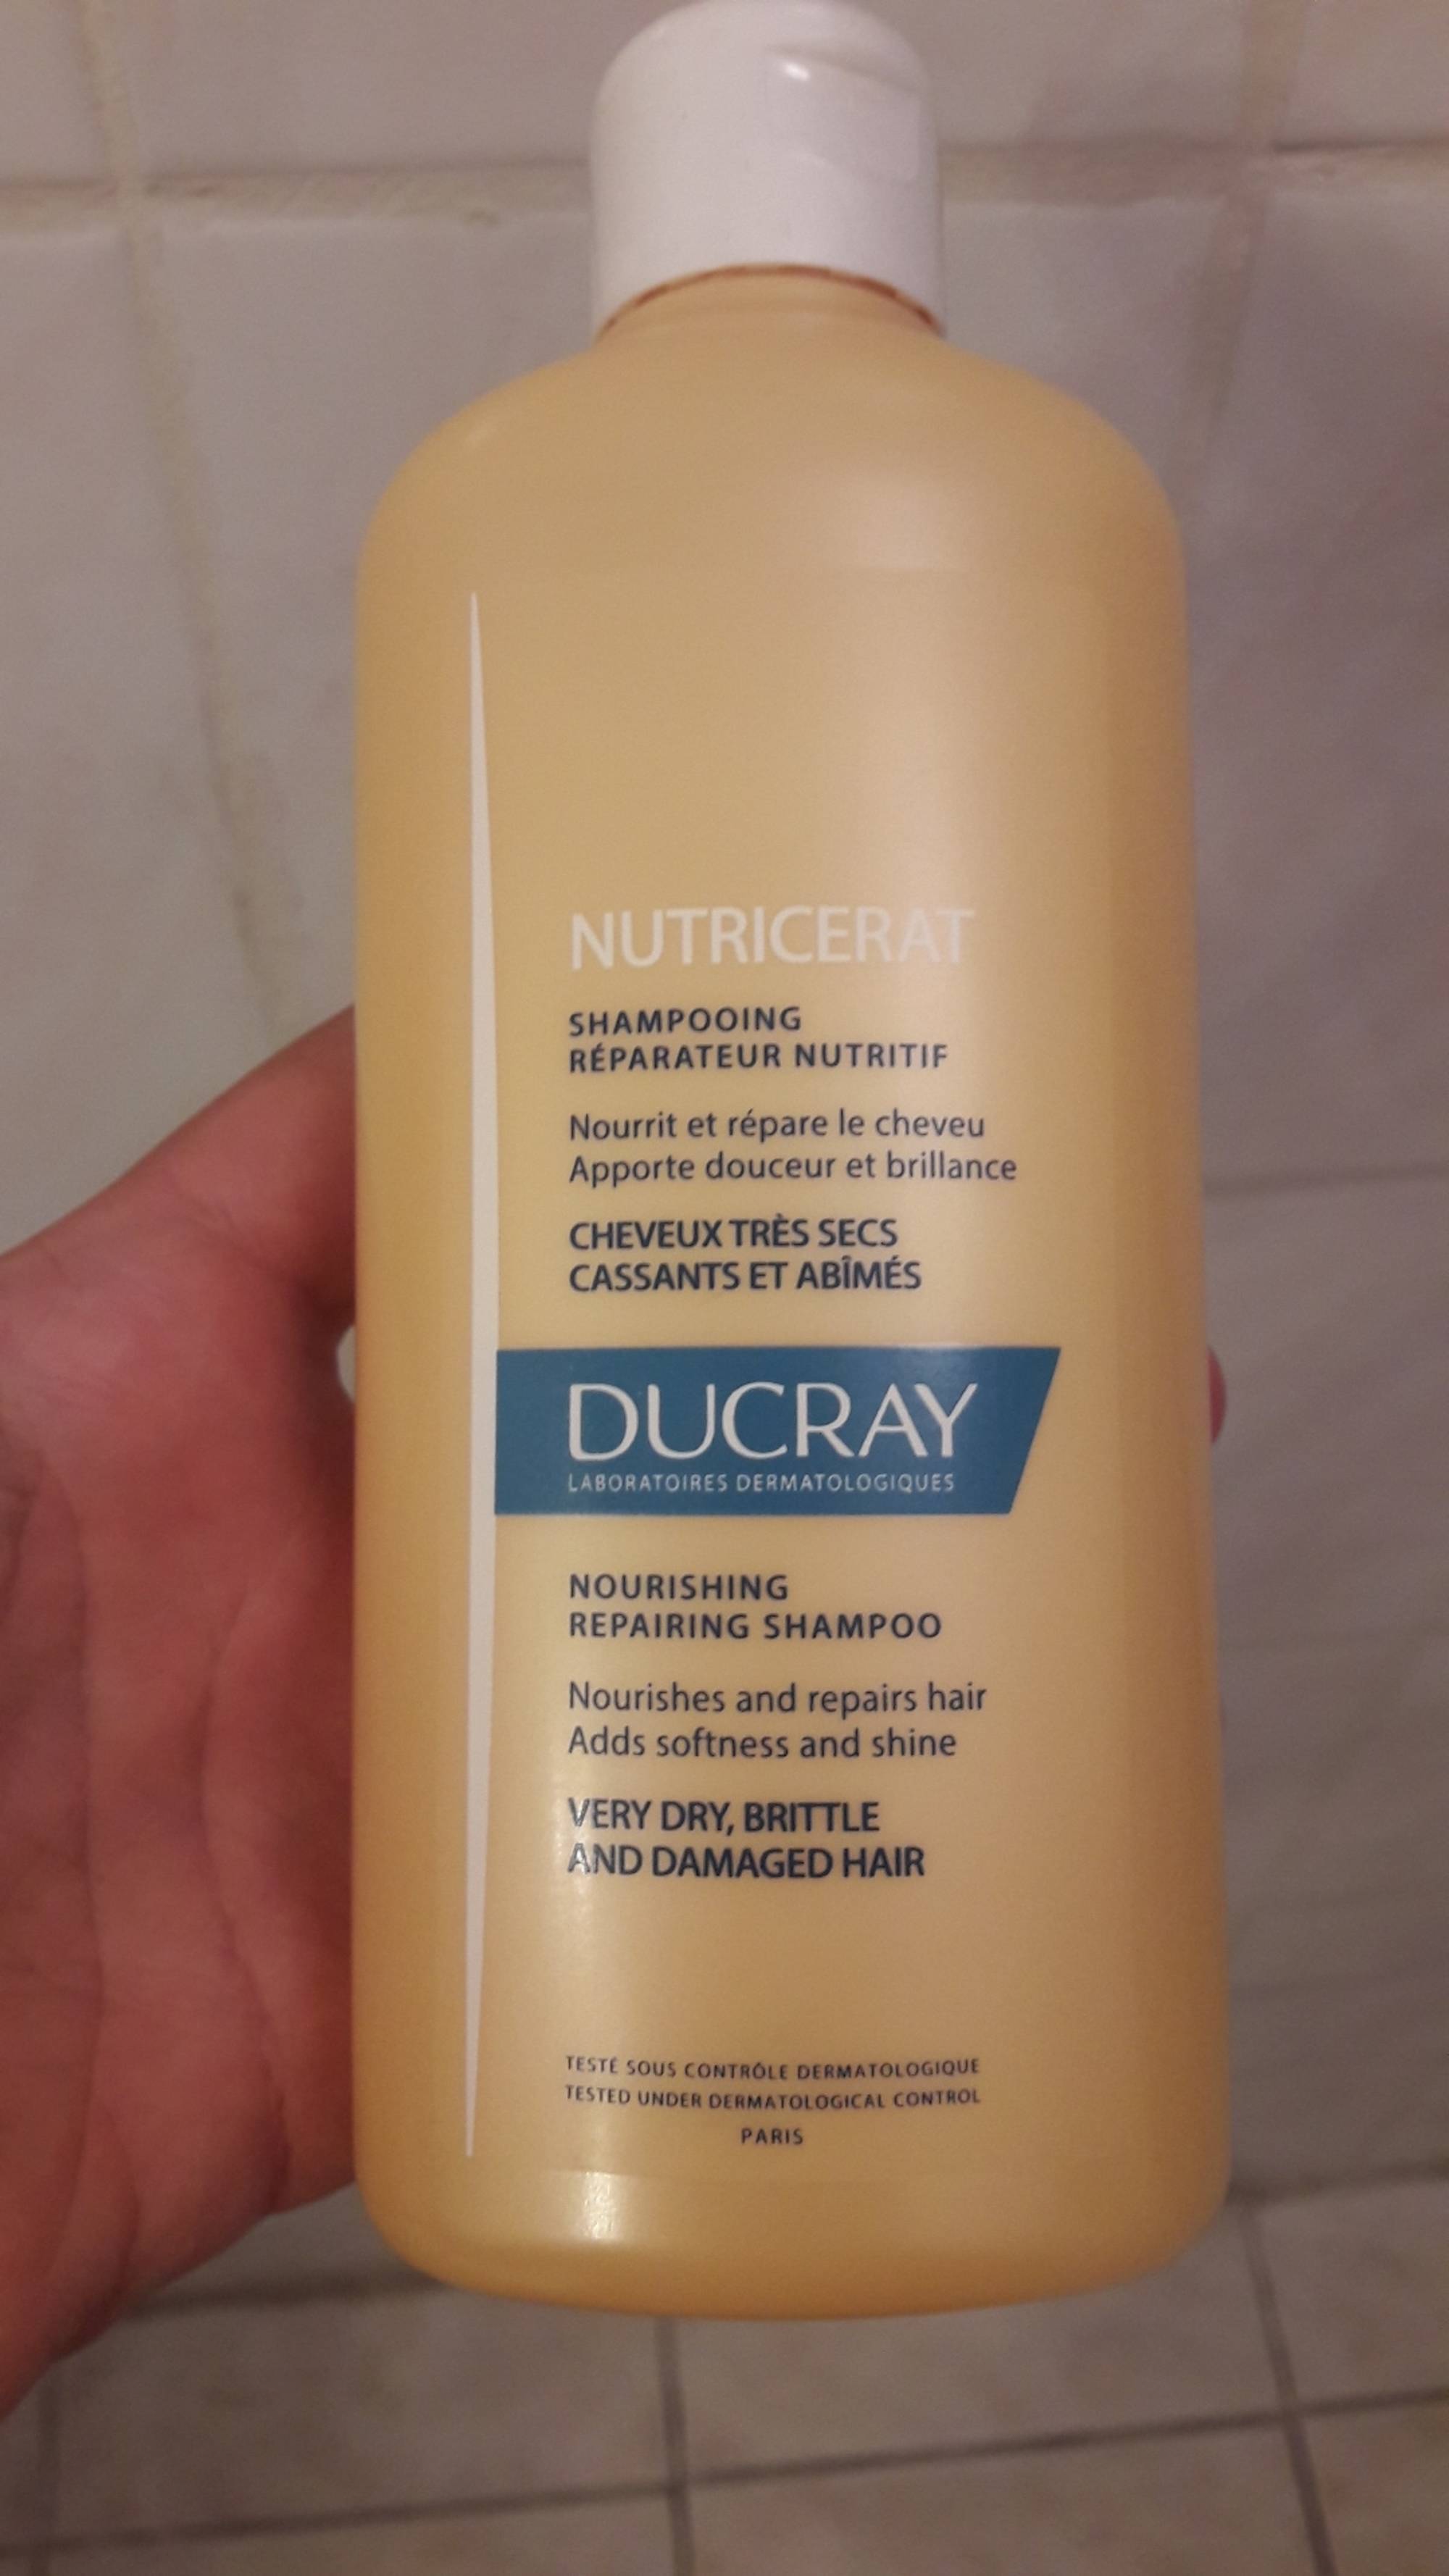 DUCRAY - Nutricerat - Shampooing réparateur nutritif 